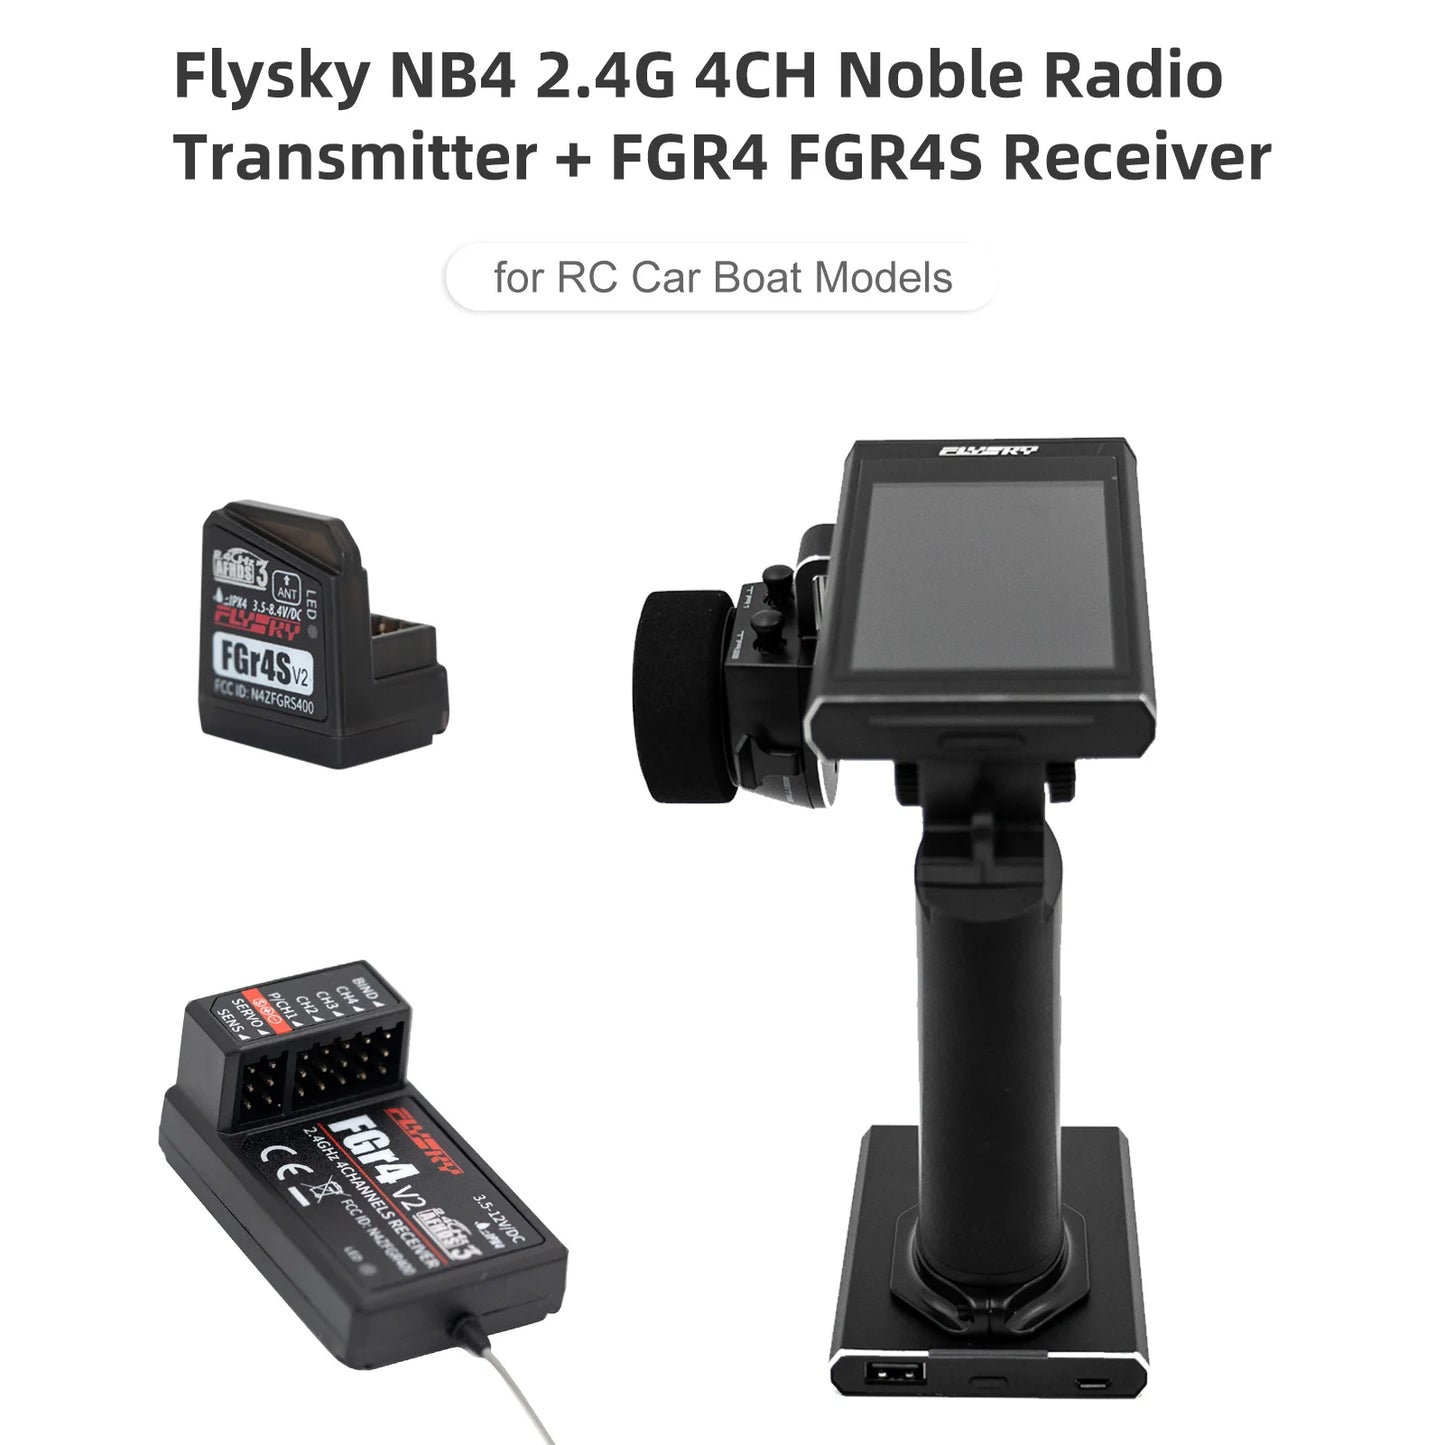 Flysky Noble NB4 2.4G 4CH Radio Transmitter - Remote Controller with FGR4 FGR4S Receiver AFHDS 3 Protocol for RC Car Boat Models